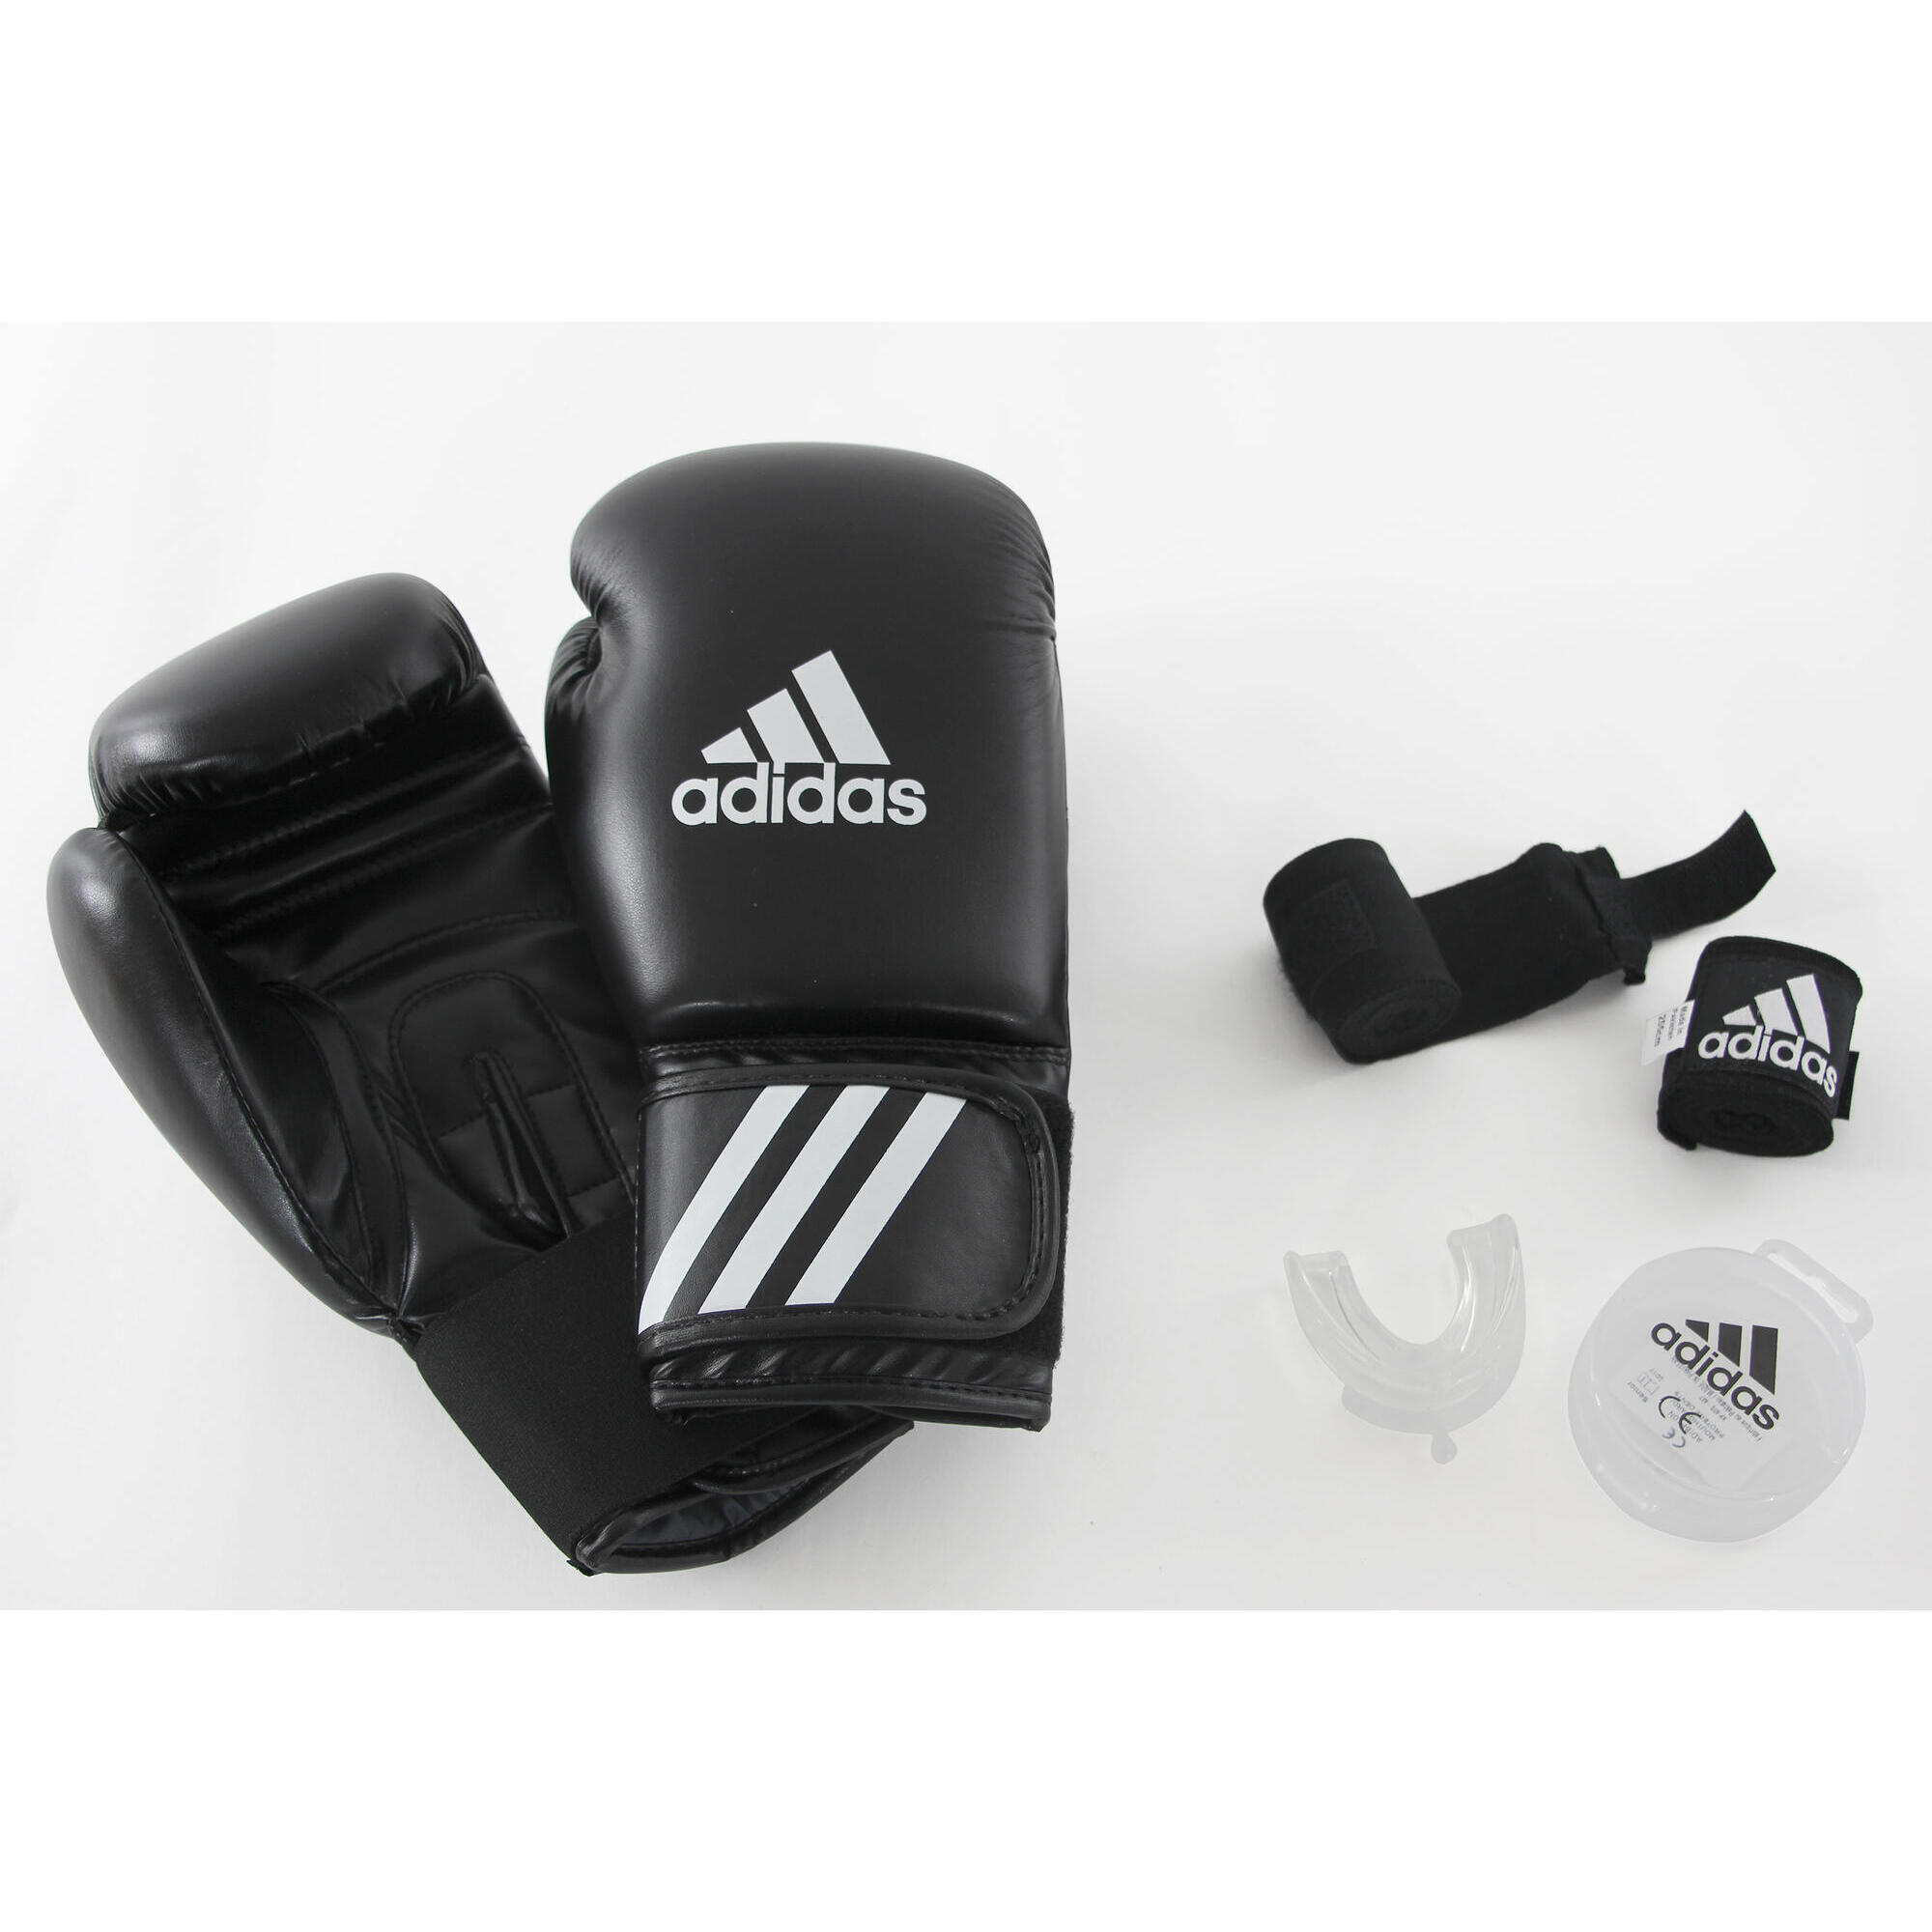 Adidas Kit boxe guantoni fasce paradenti